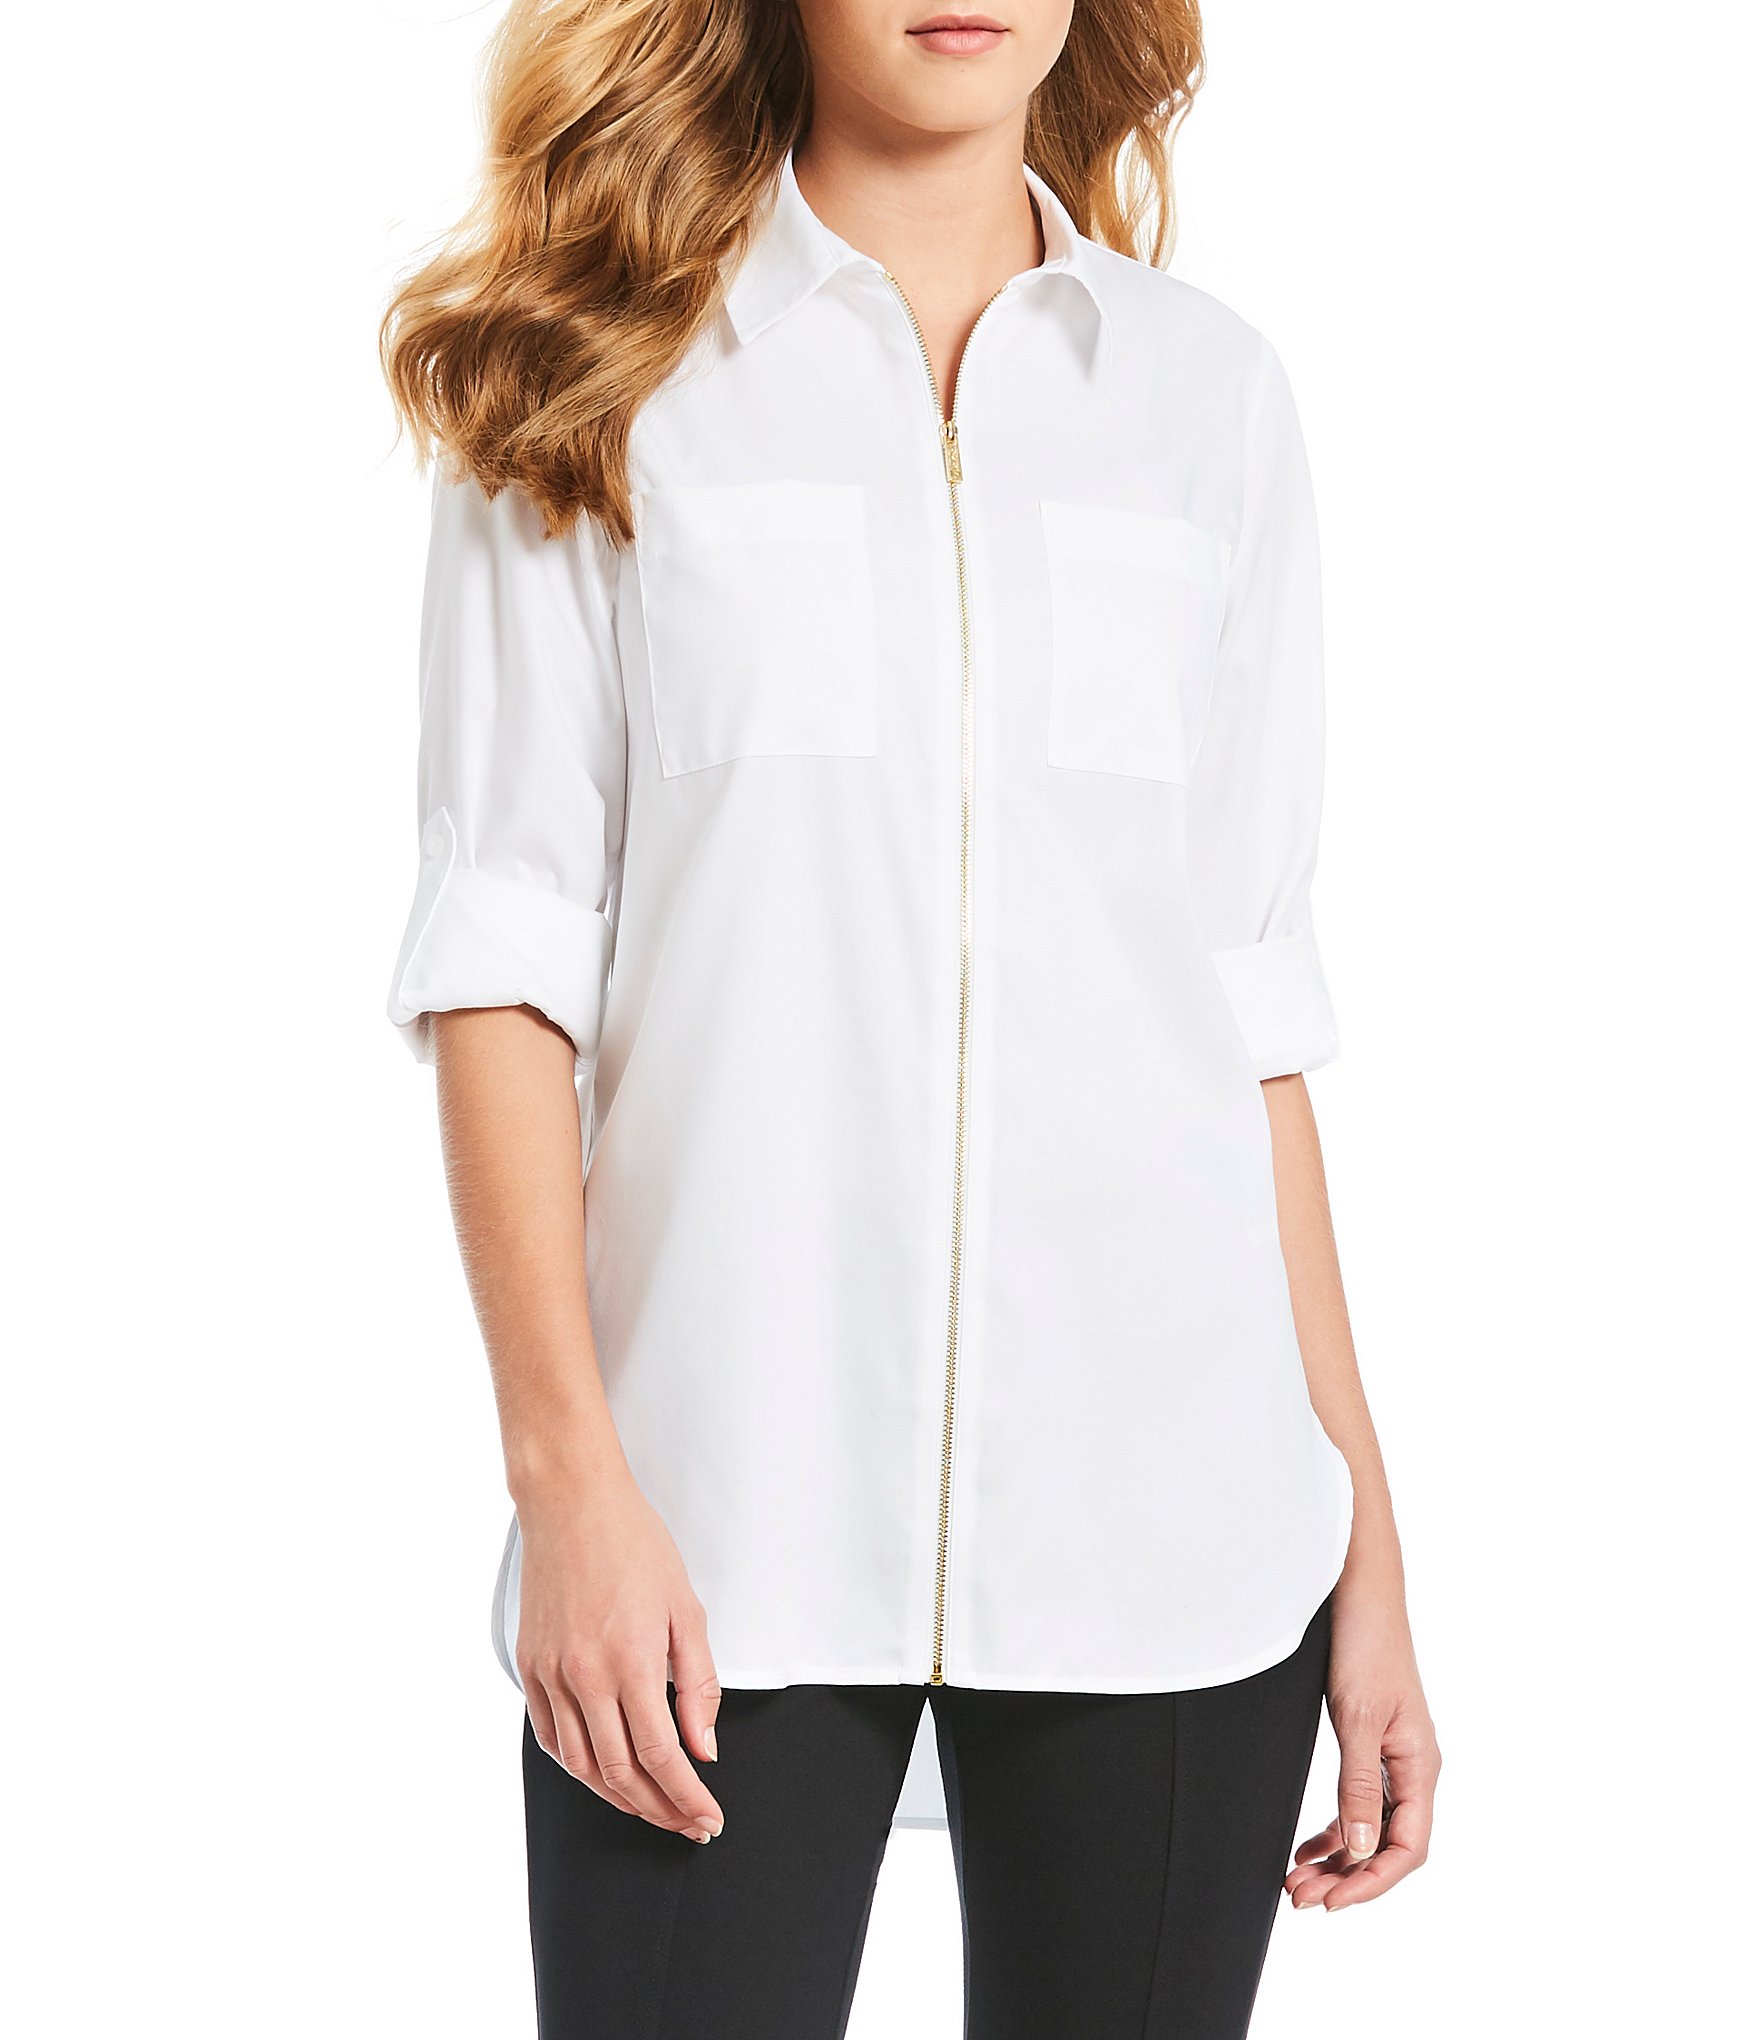 dillards white blouses